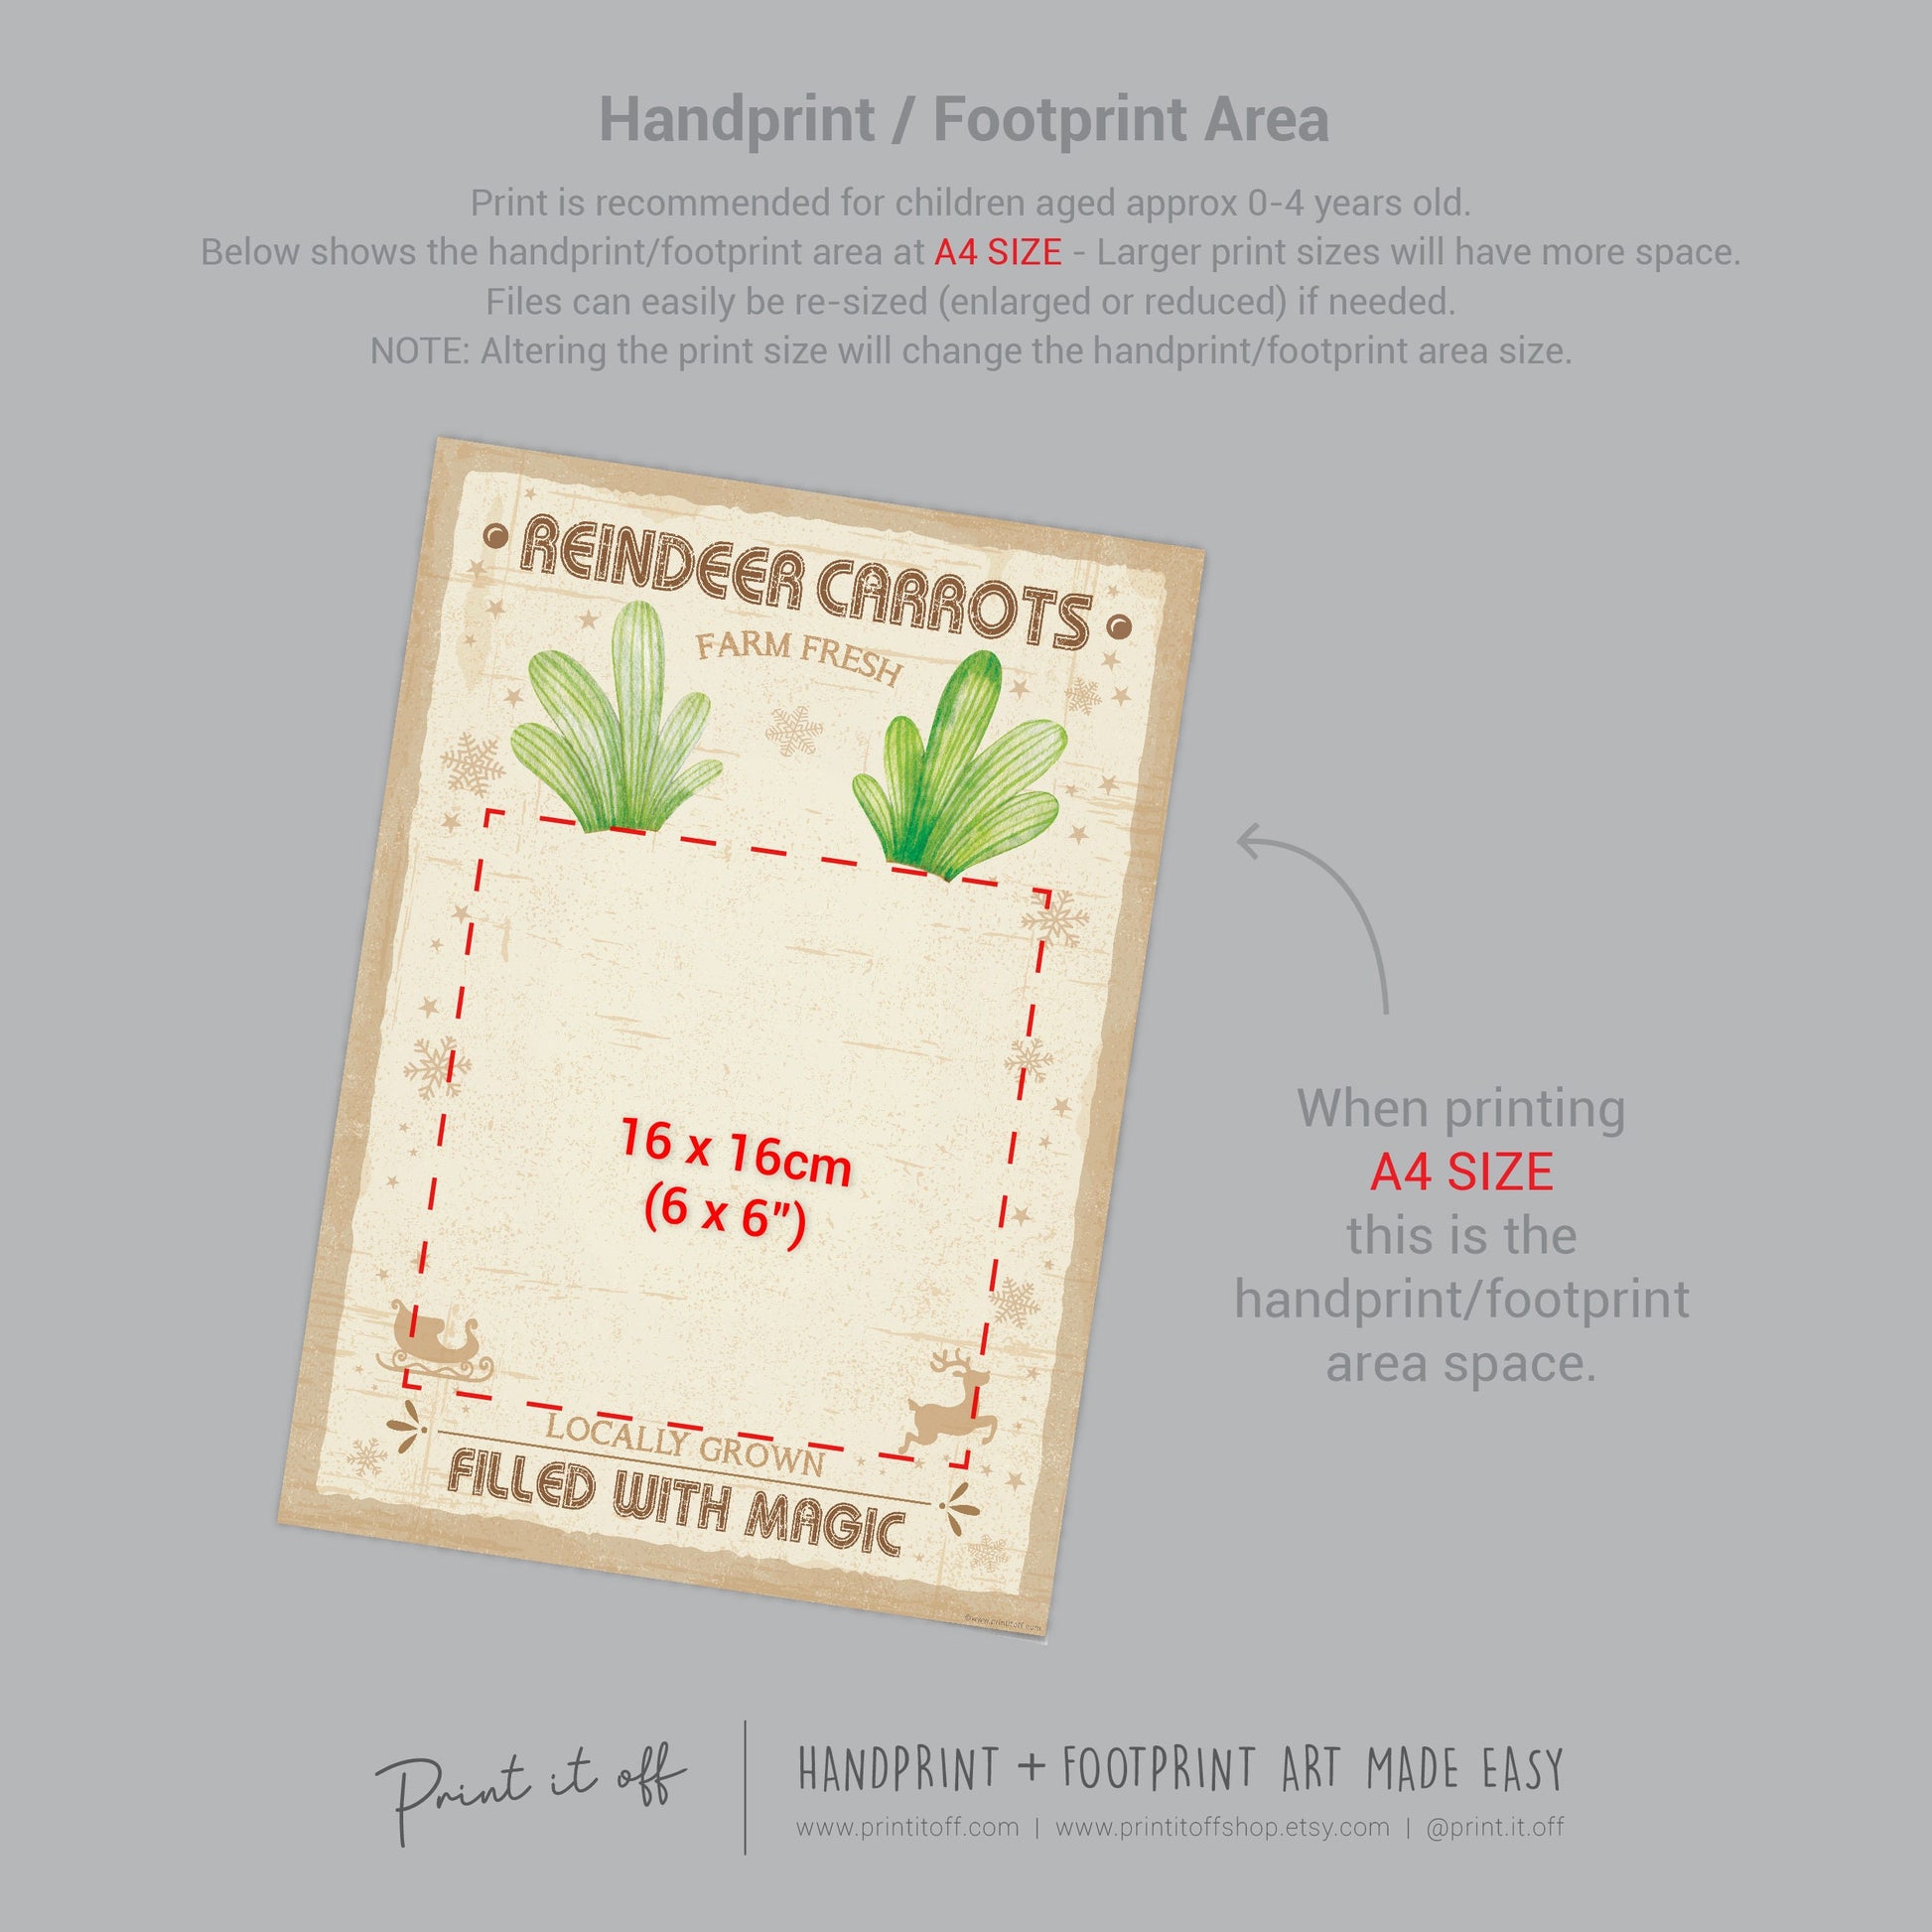 Reindeer Carrots Footprint Feet Art Craft / Christmas Xmas Kids Baby Toddler / Keepsake Gift Card Sign Memory PRINT IT OFF